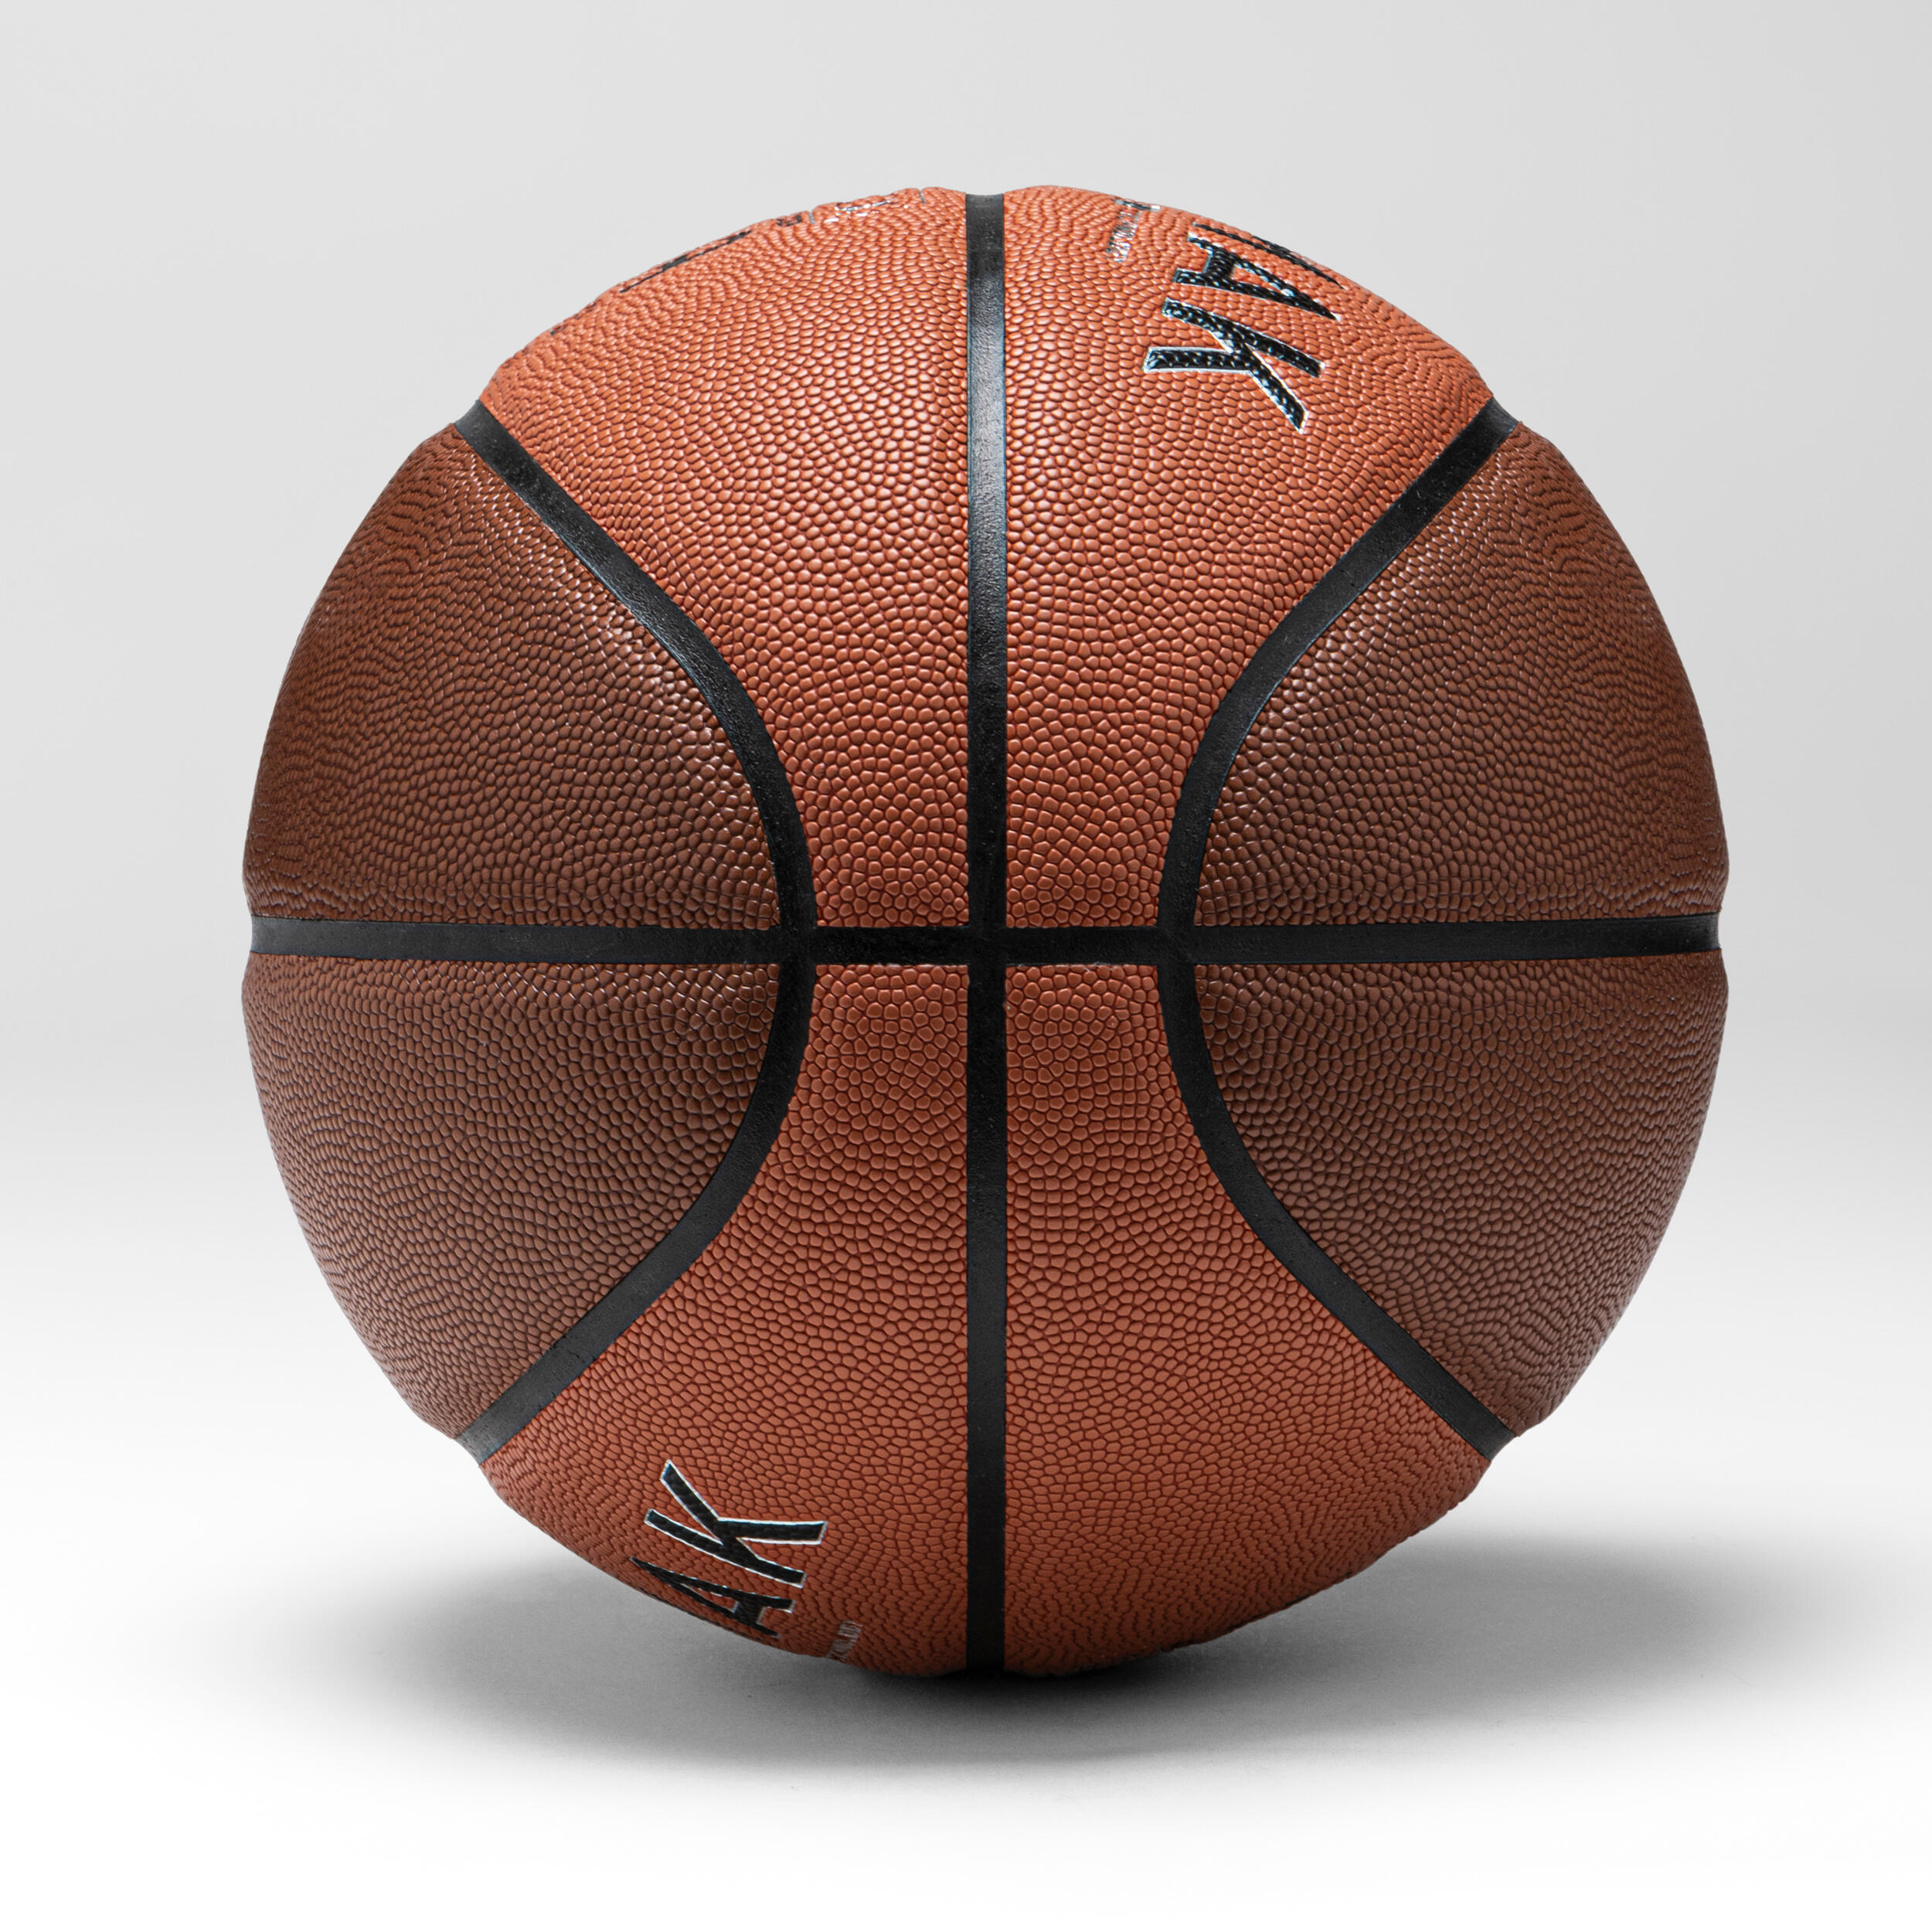 Adult Basketball BT500 Grip Size 7 - Brown/Orange 6/6